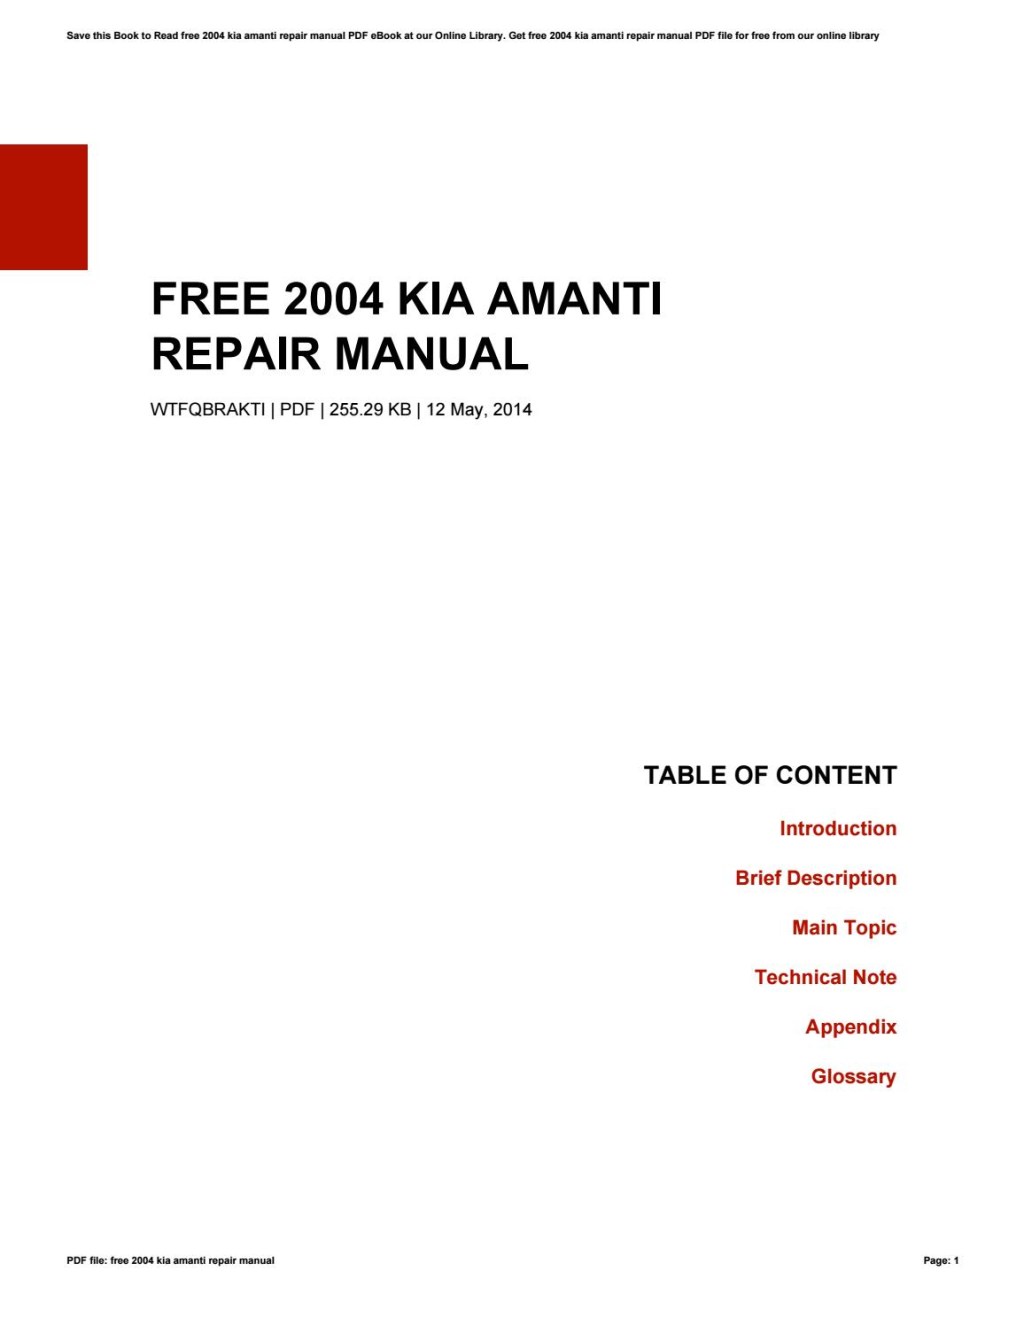 Picture of: Free  kia amanti repair manual by Michael – Issuu